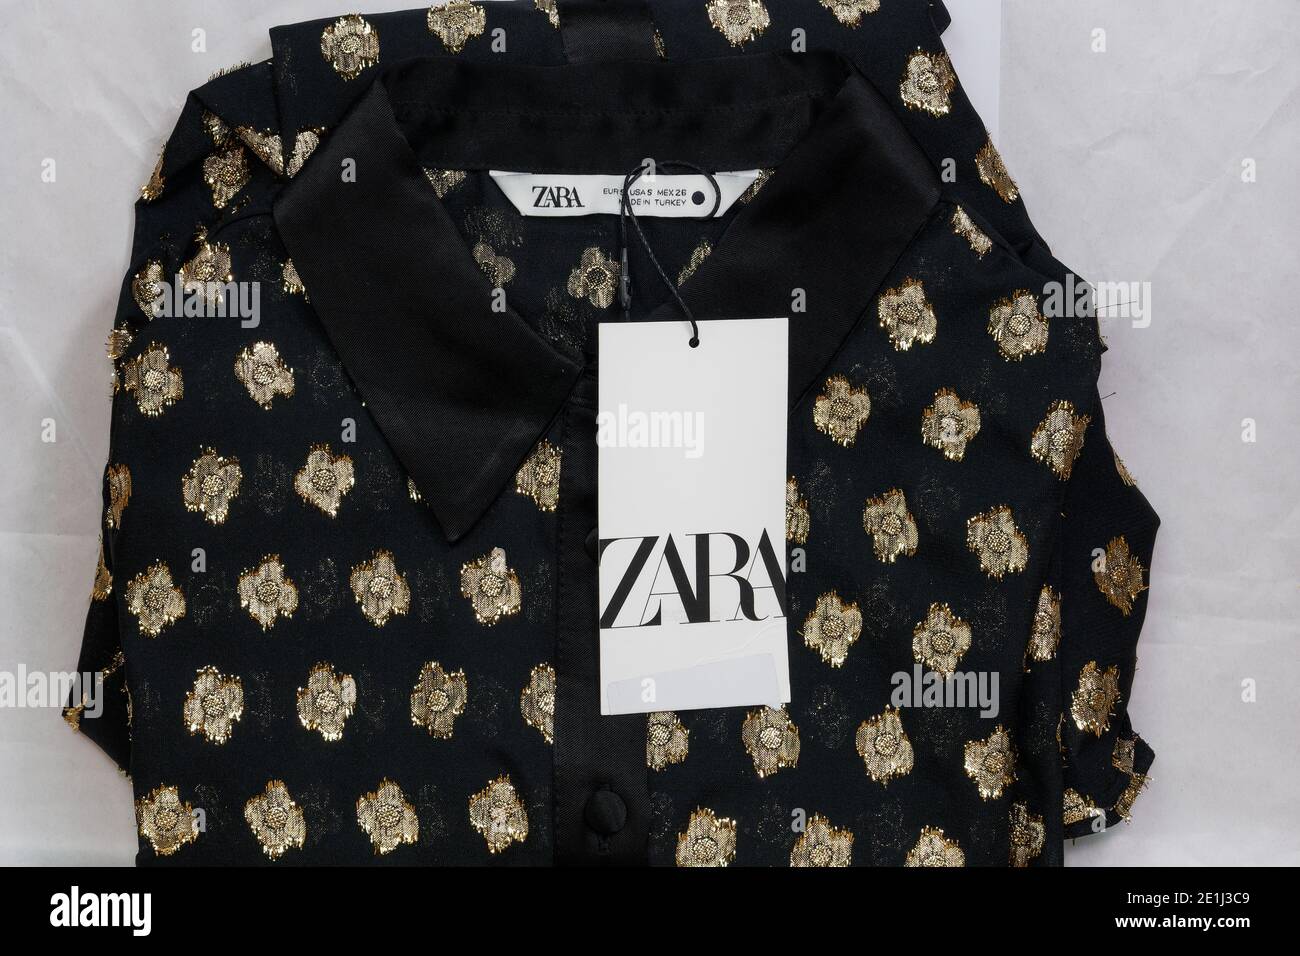 Zara shirt hi-res stock photography and images - Alamy